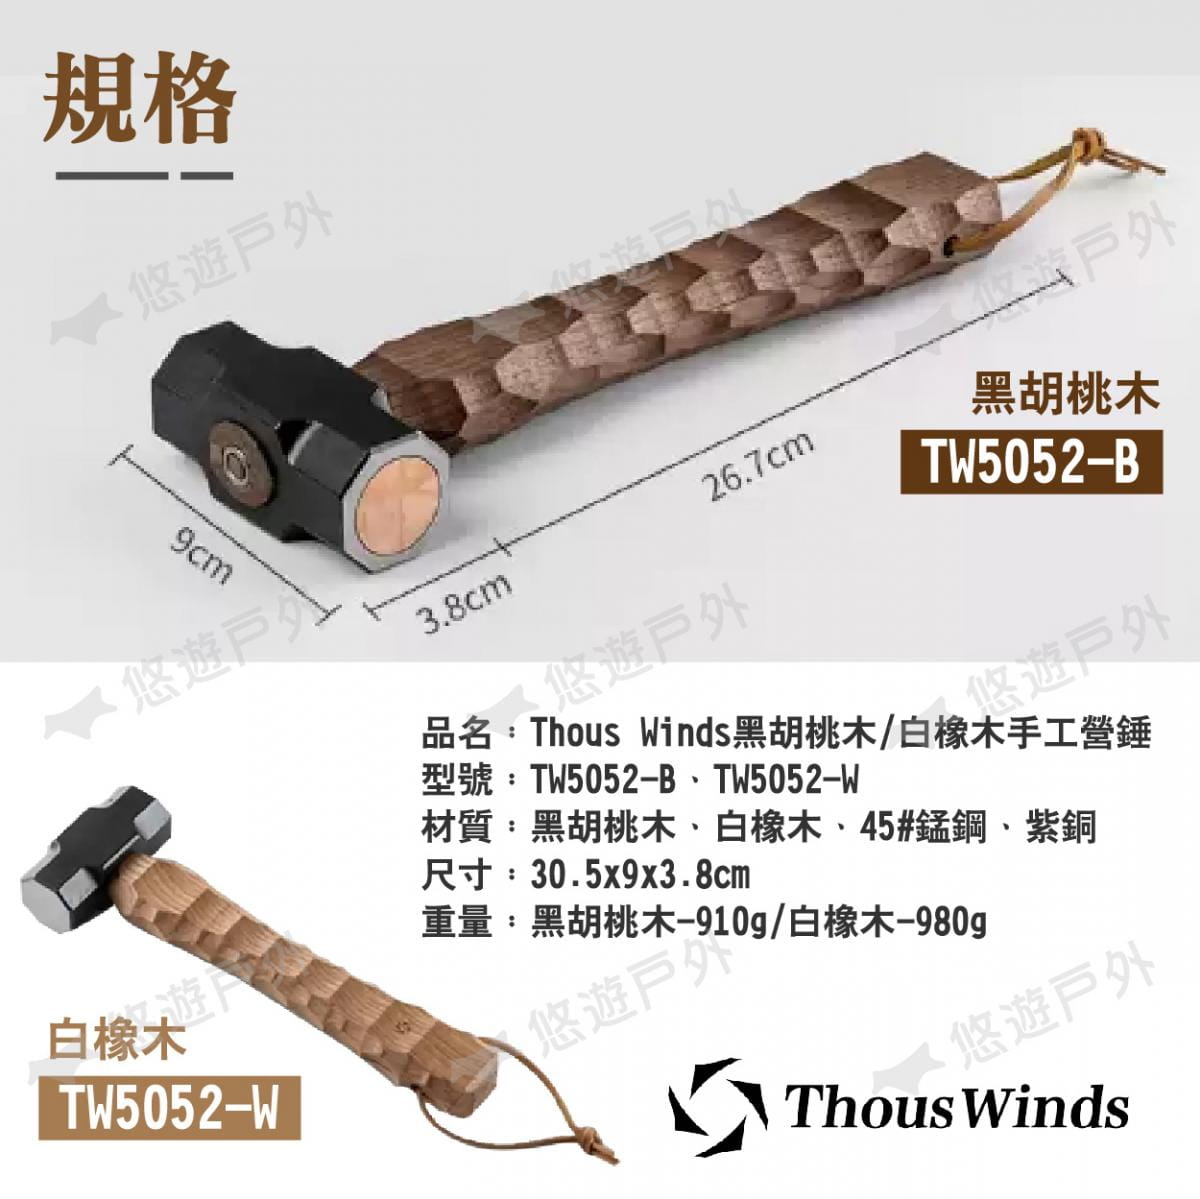 【Thous Winds】白橡木手工營錘 TW5052-W (悠遊戶外) 6